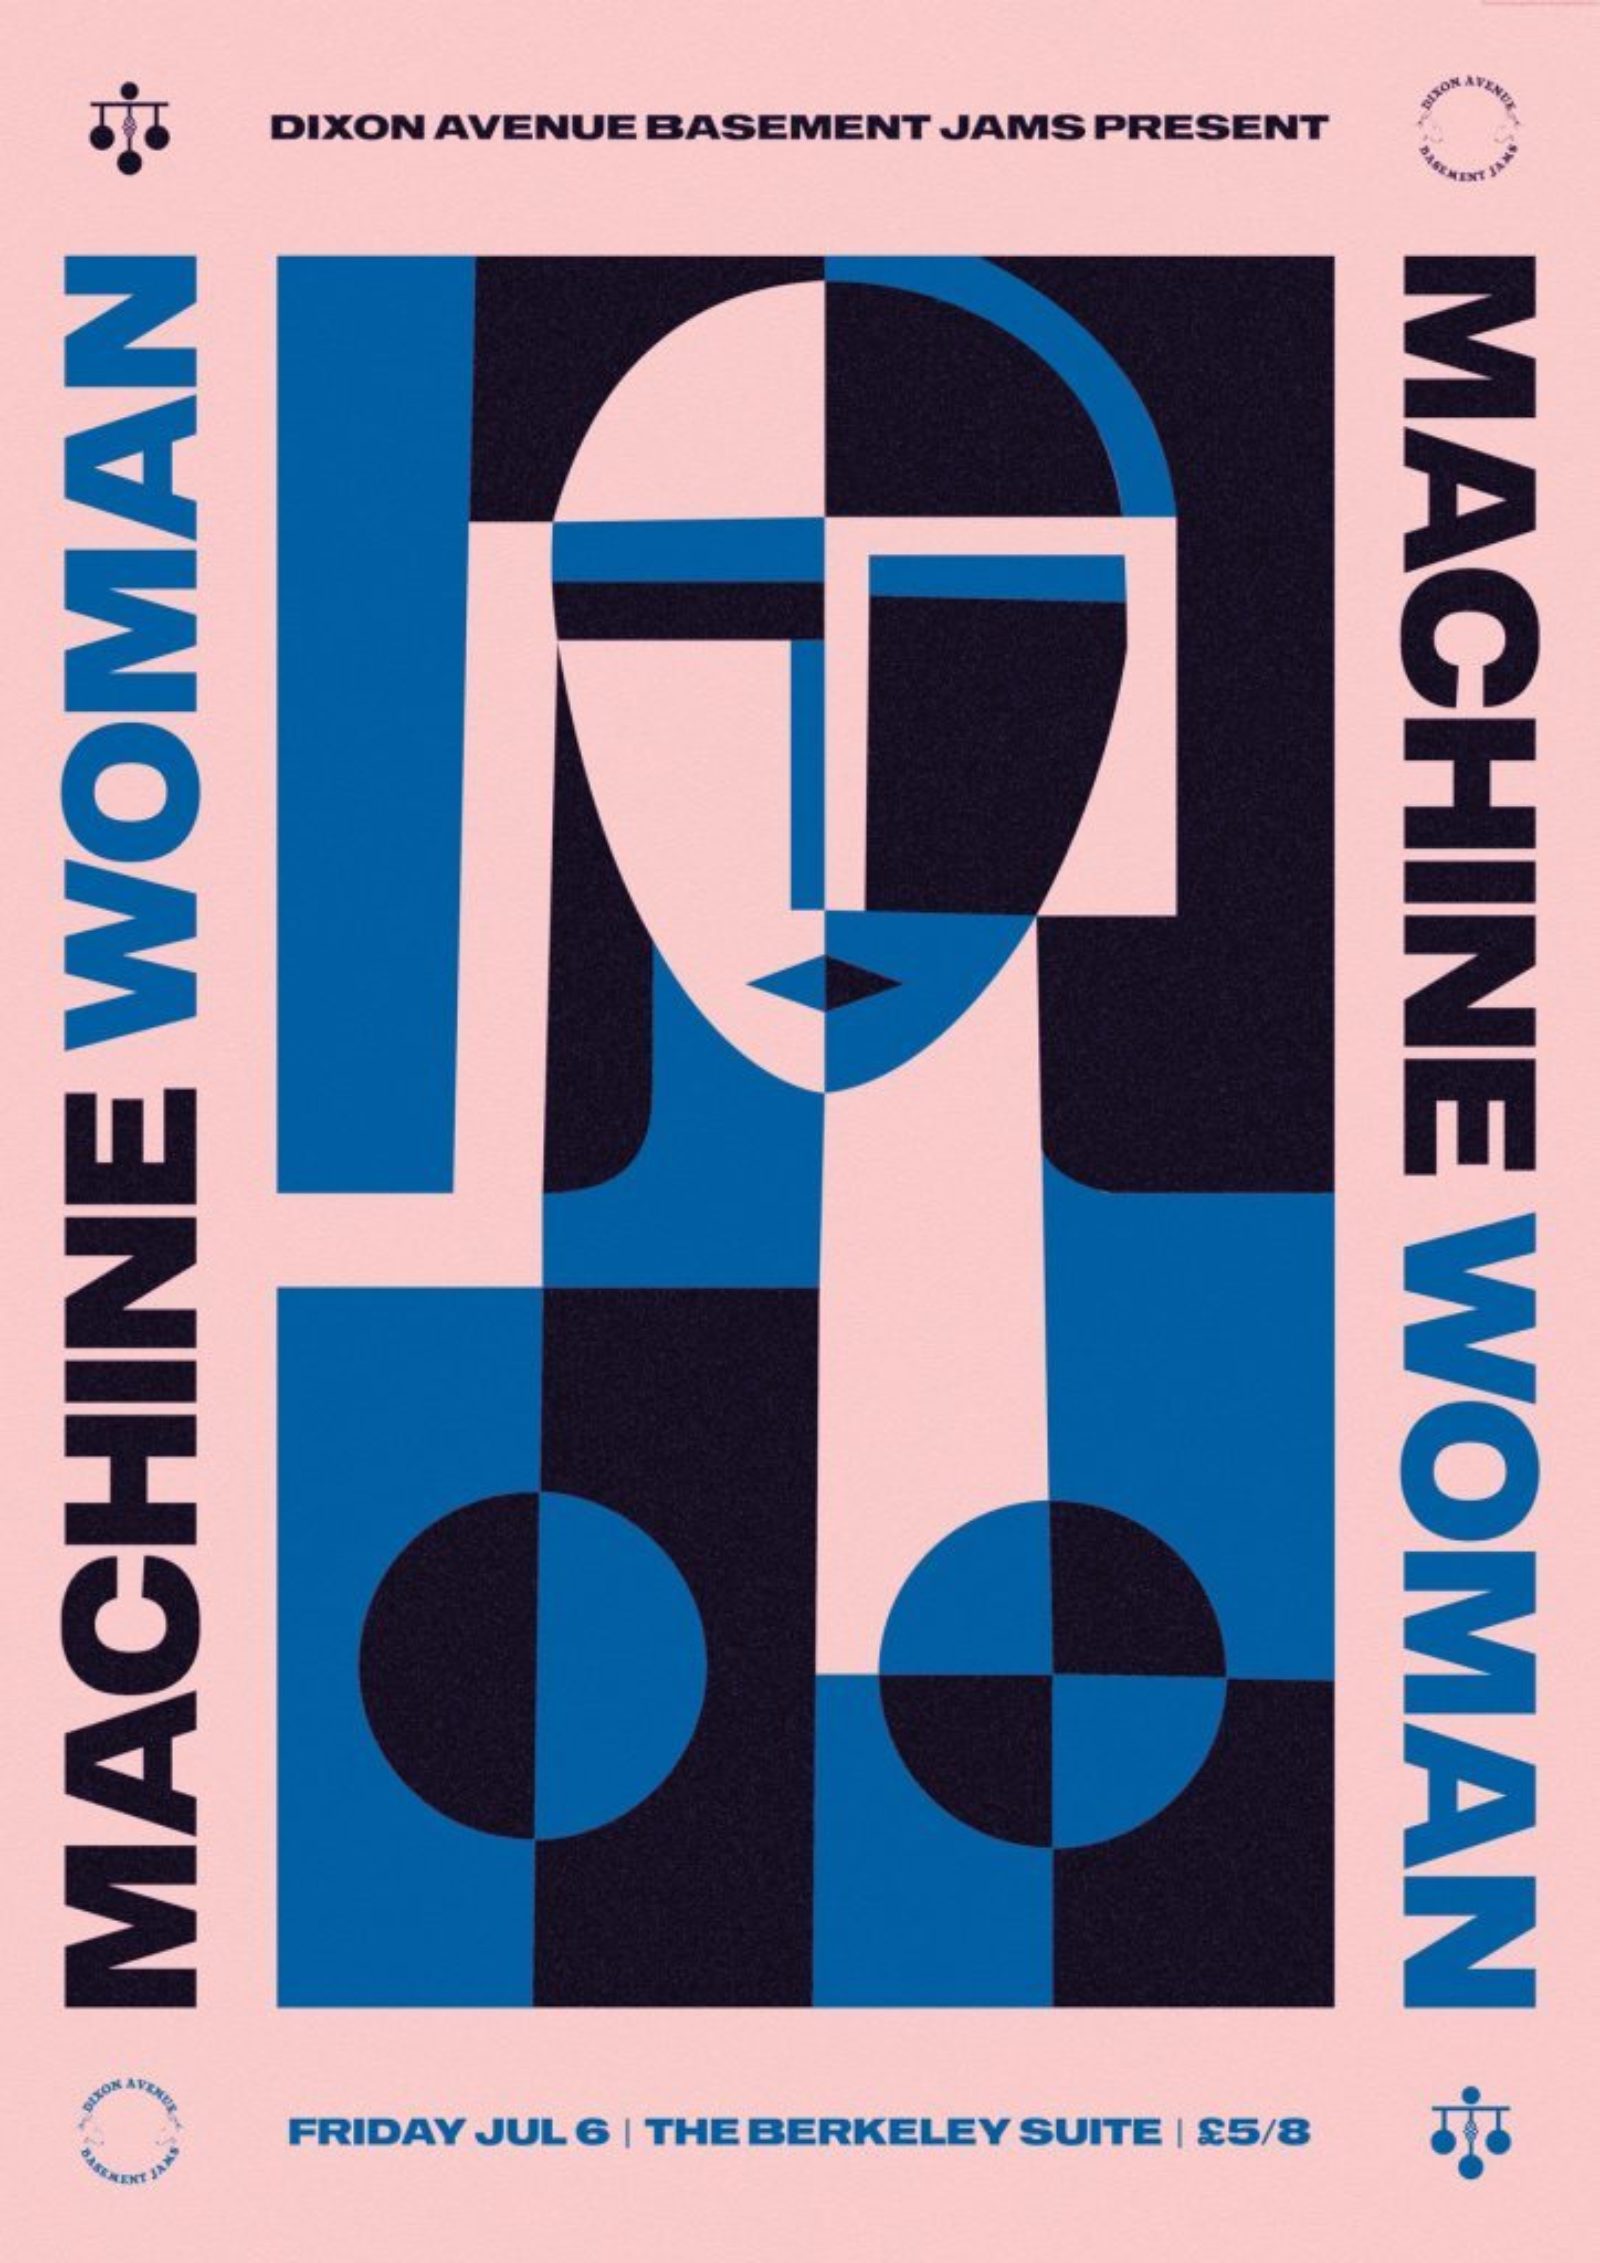 DABJ with Machine Woman